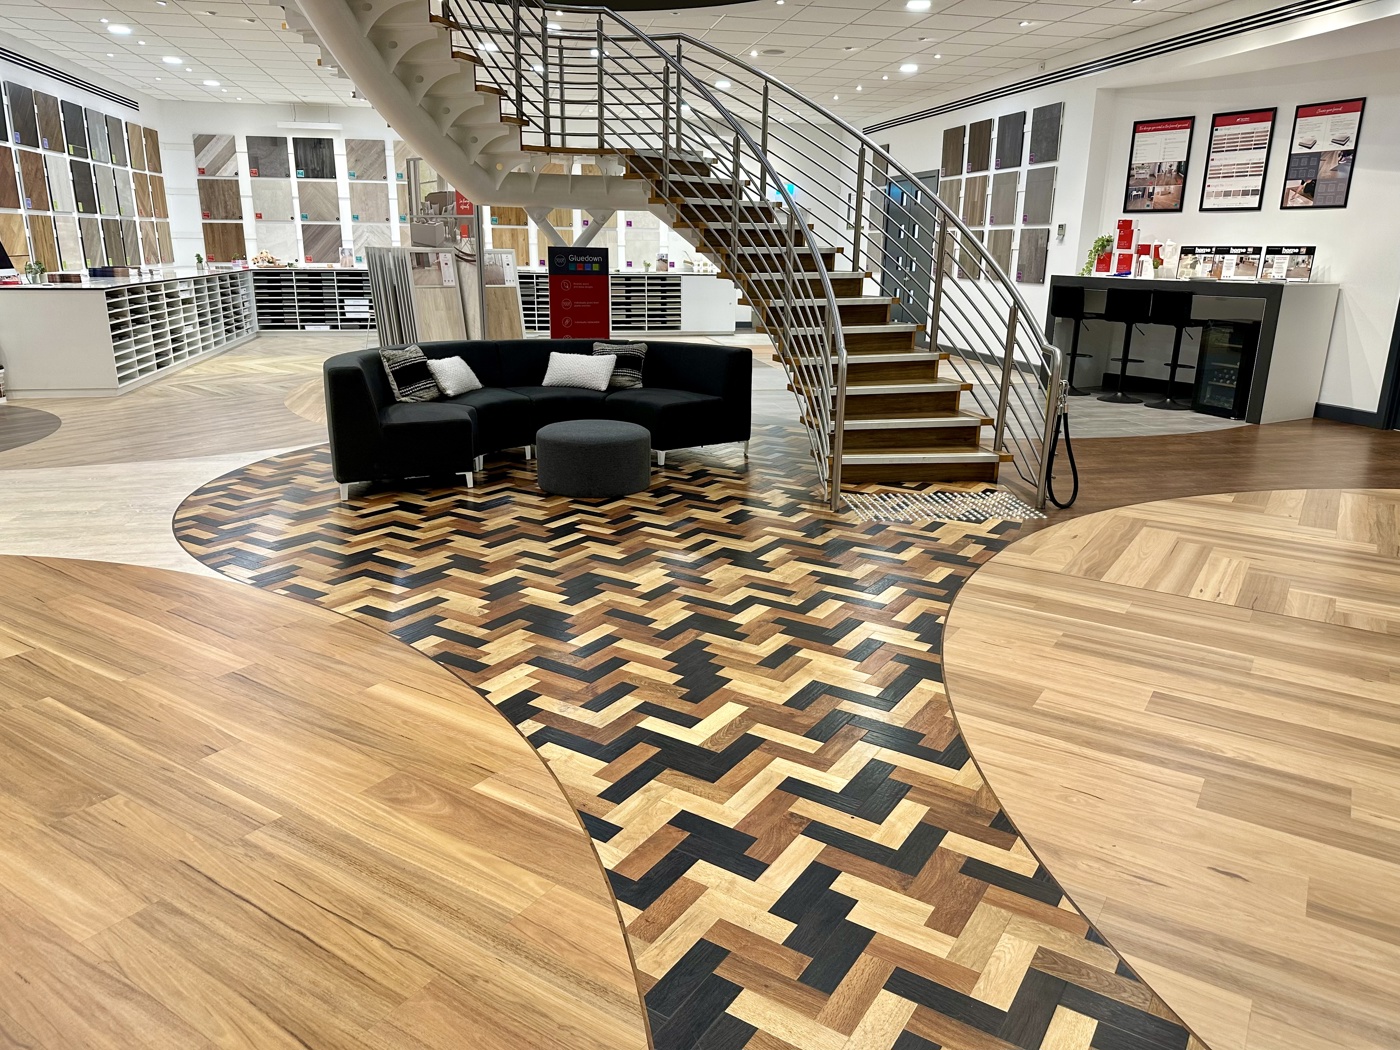 residential showroom image showing more than 20 karndean floors